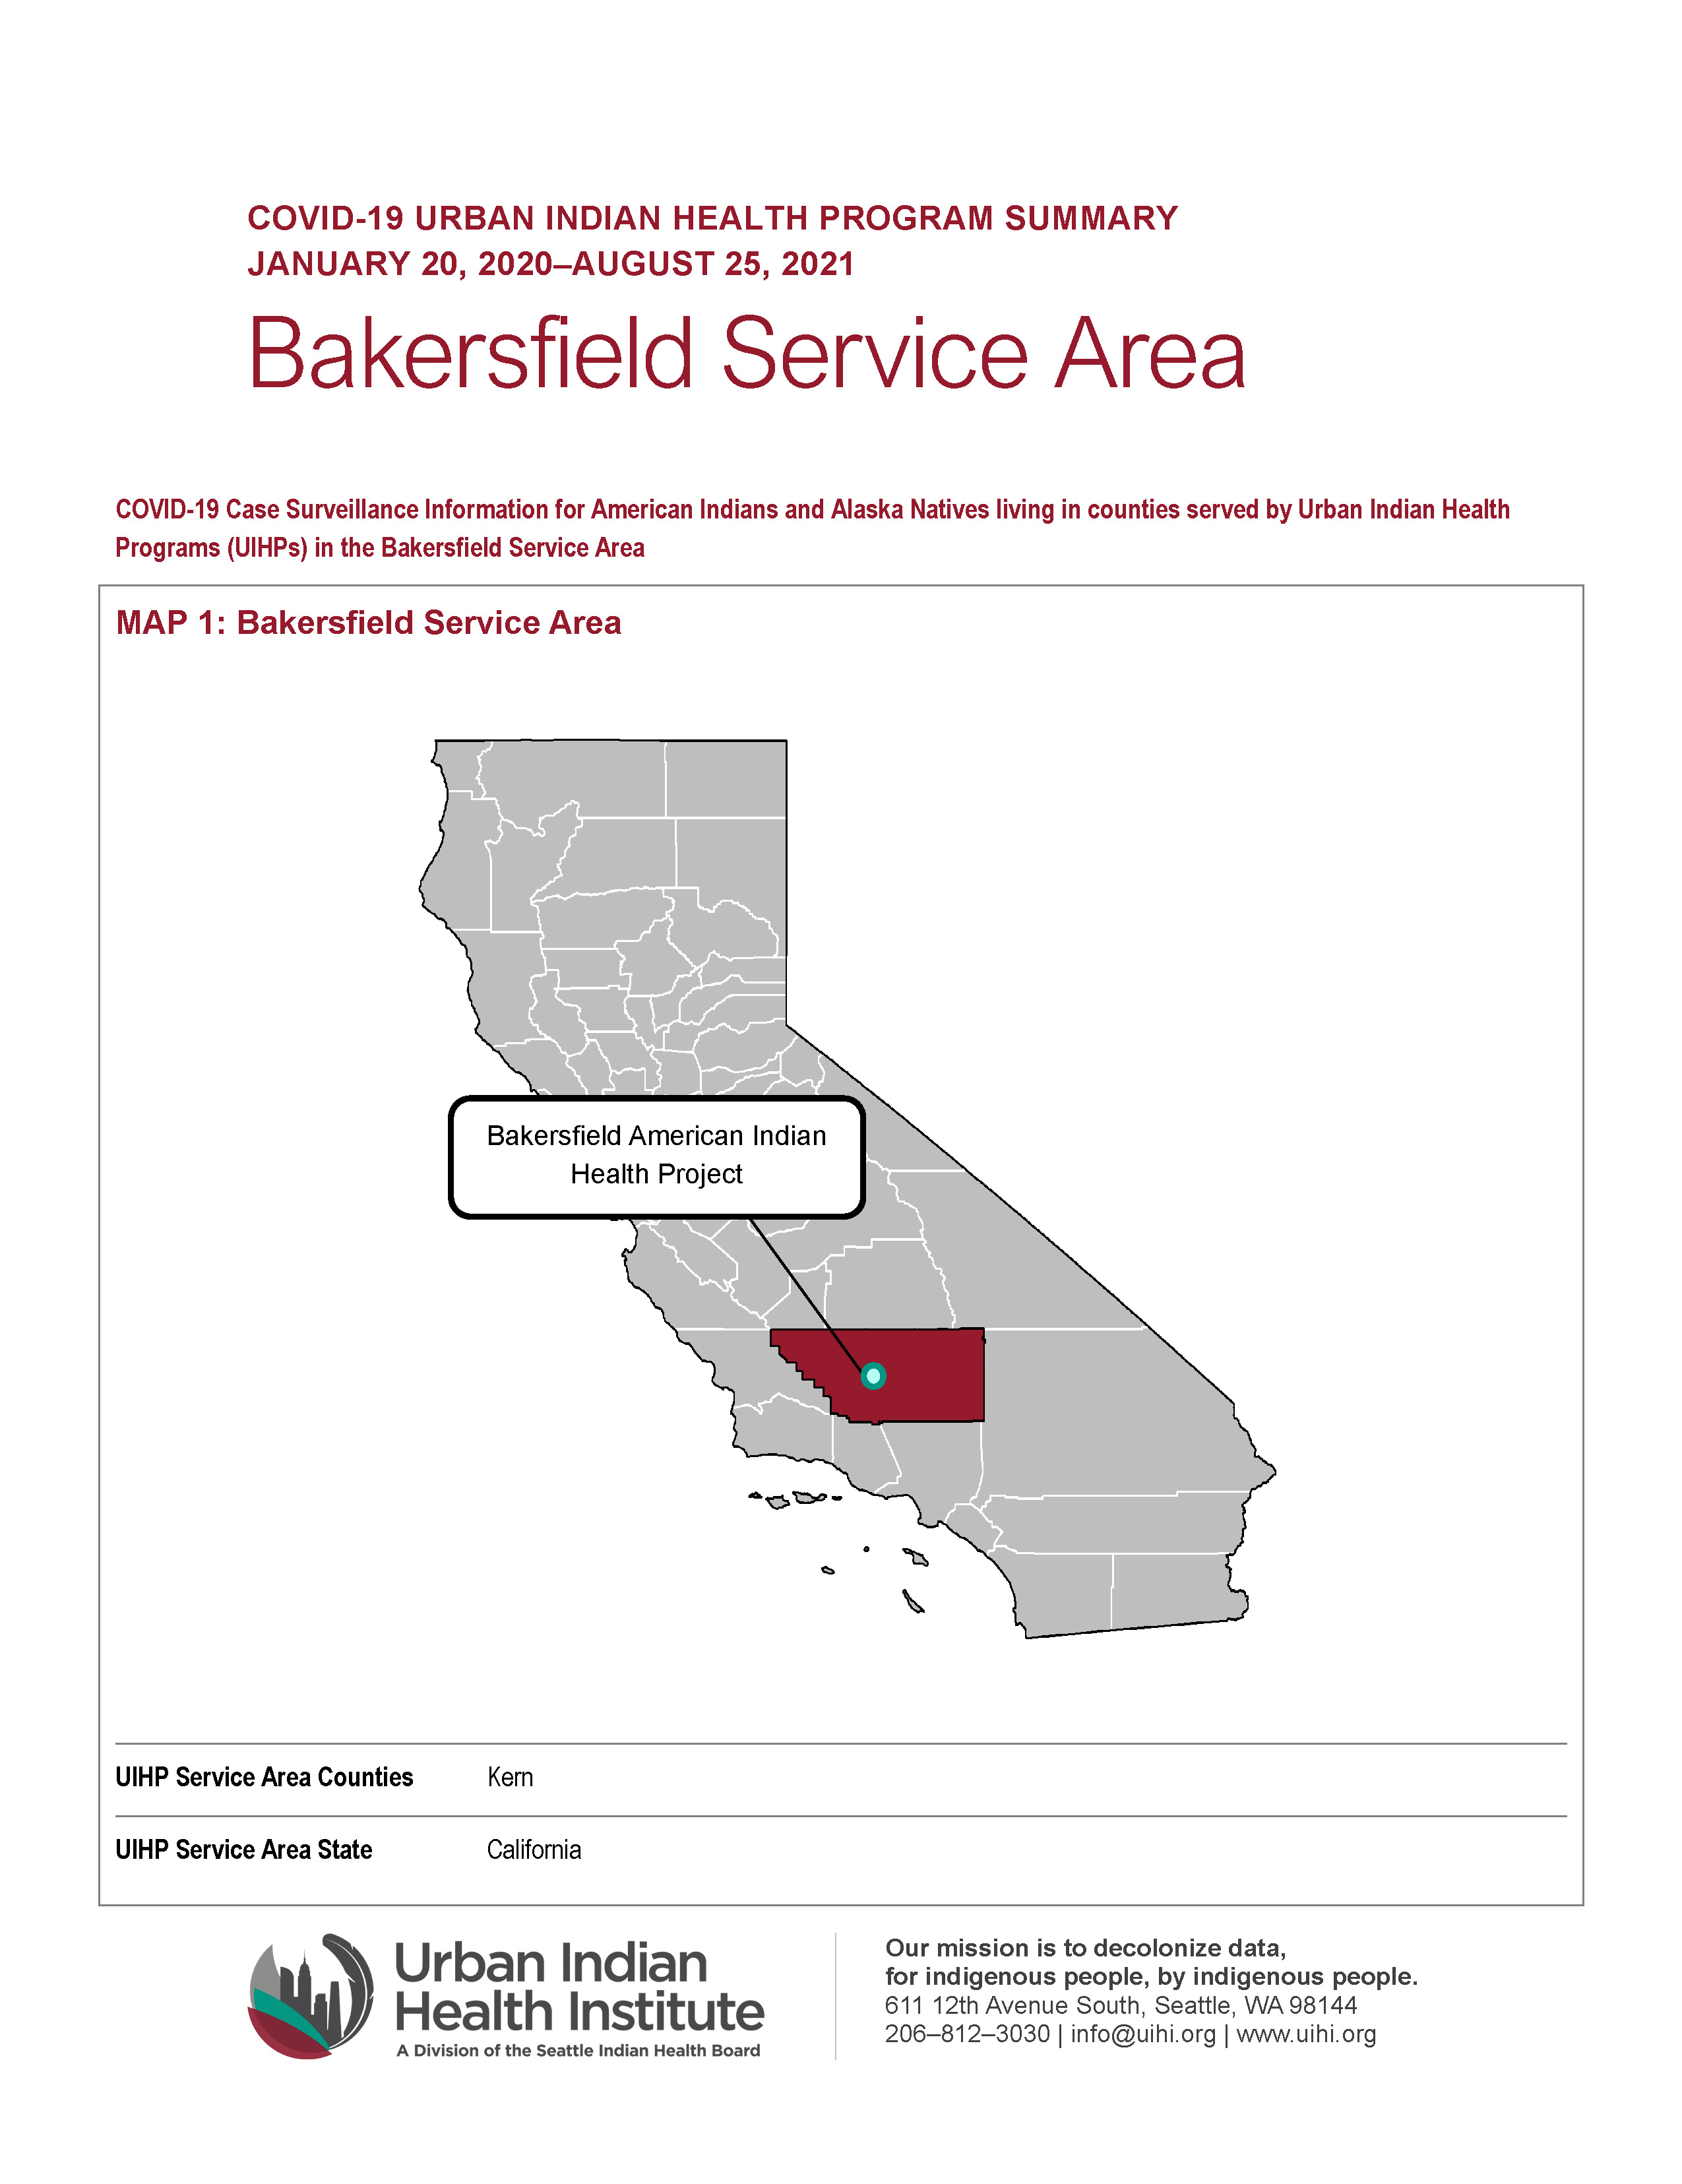 Urban Indian Organization COVID-19 Surveillance Report, Bakersfield Service Area